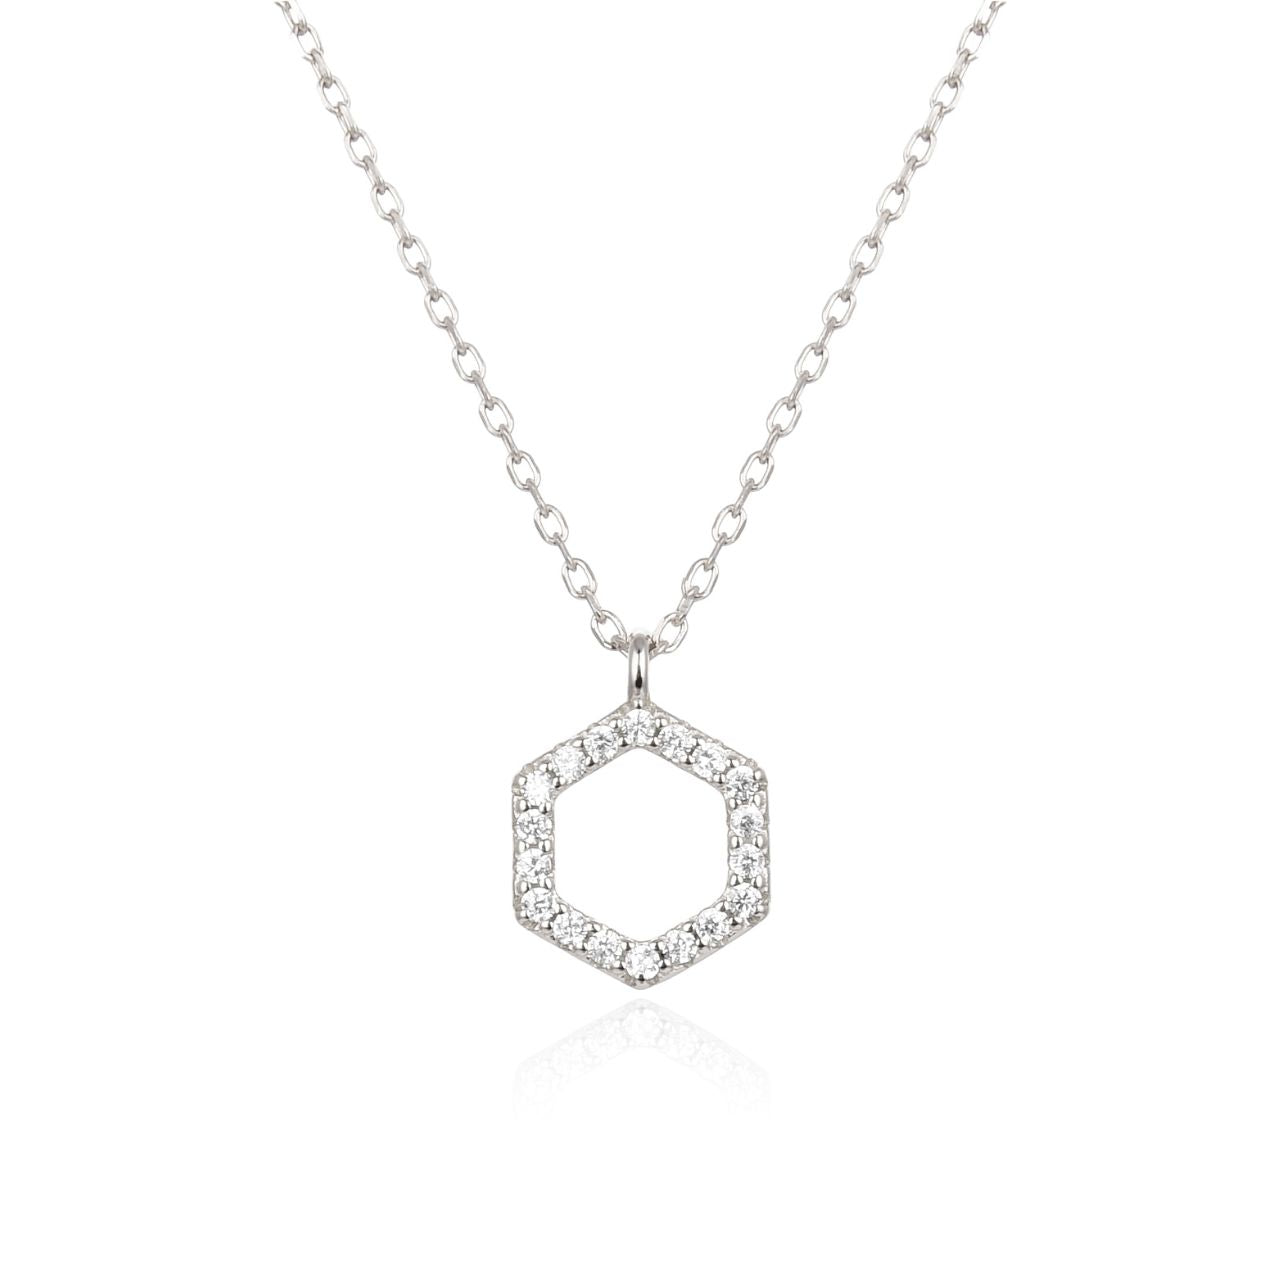 Silver Hexagonal Necklace by Kilkenny Silver  Sterling silver hexagonal necklace with cubic zirconia stones.